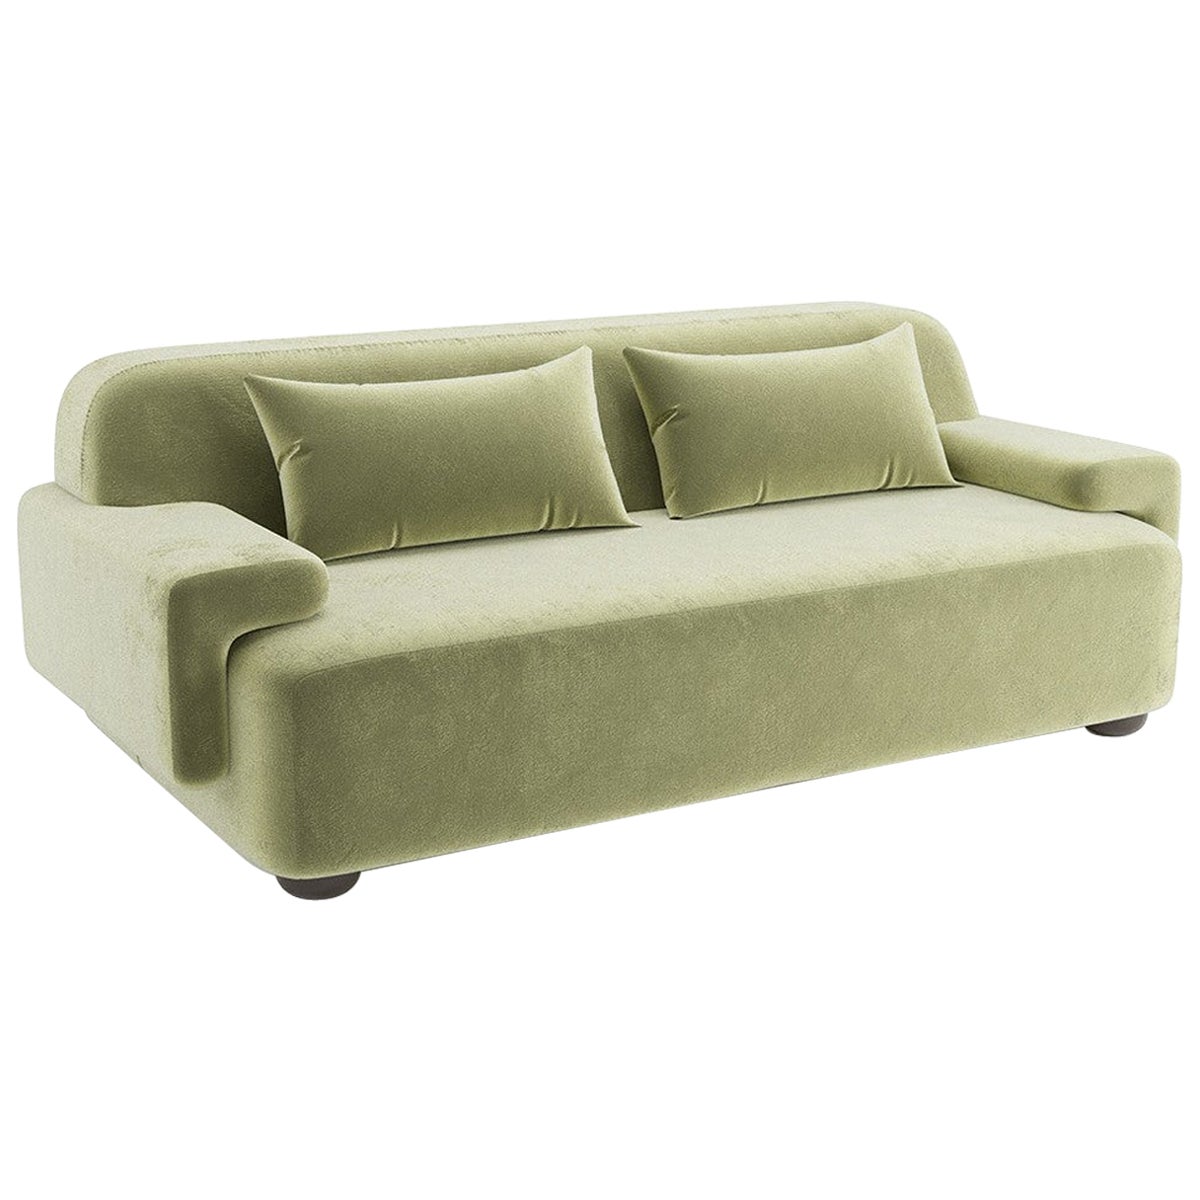 Popus Editions Lena 4 Seater Sofa in Almond Green Como Velvet Upholstery